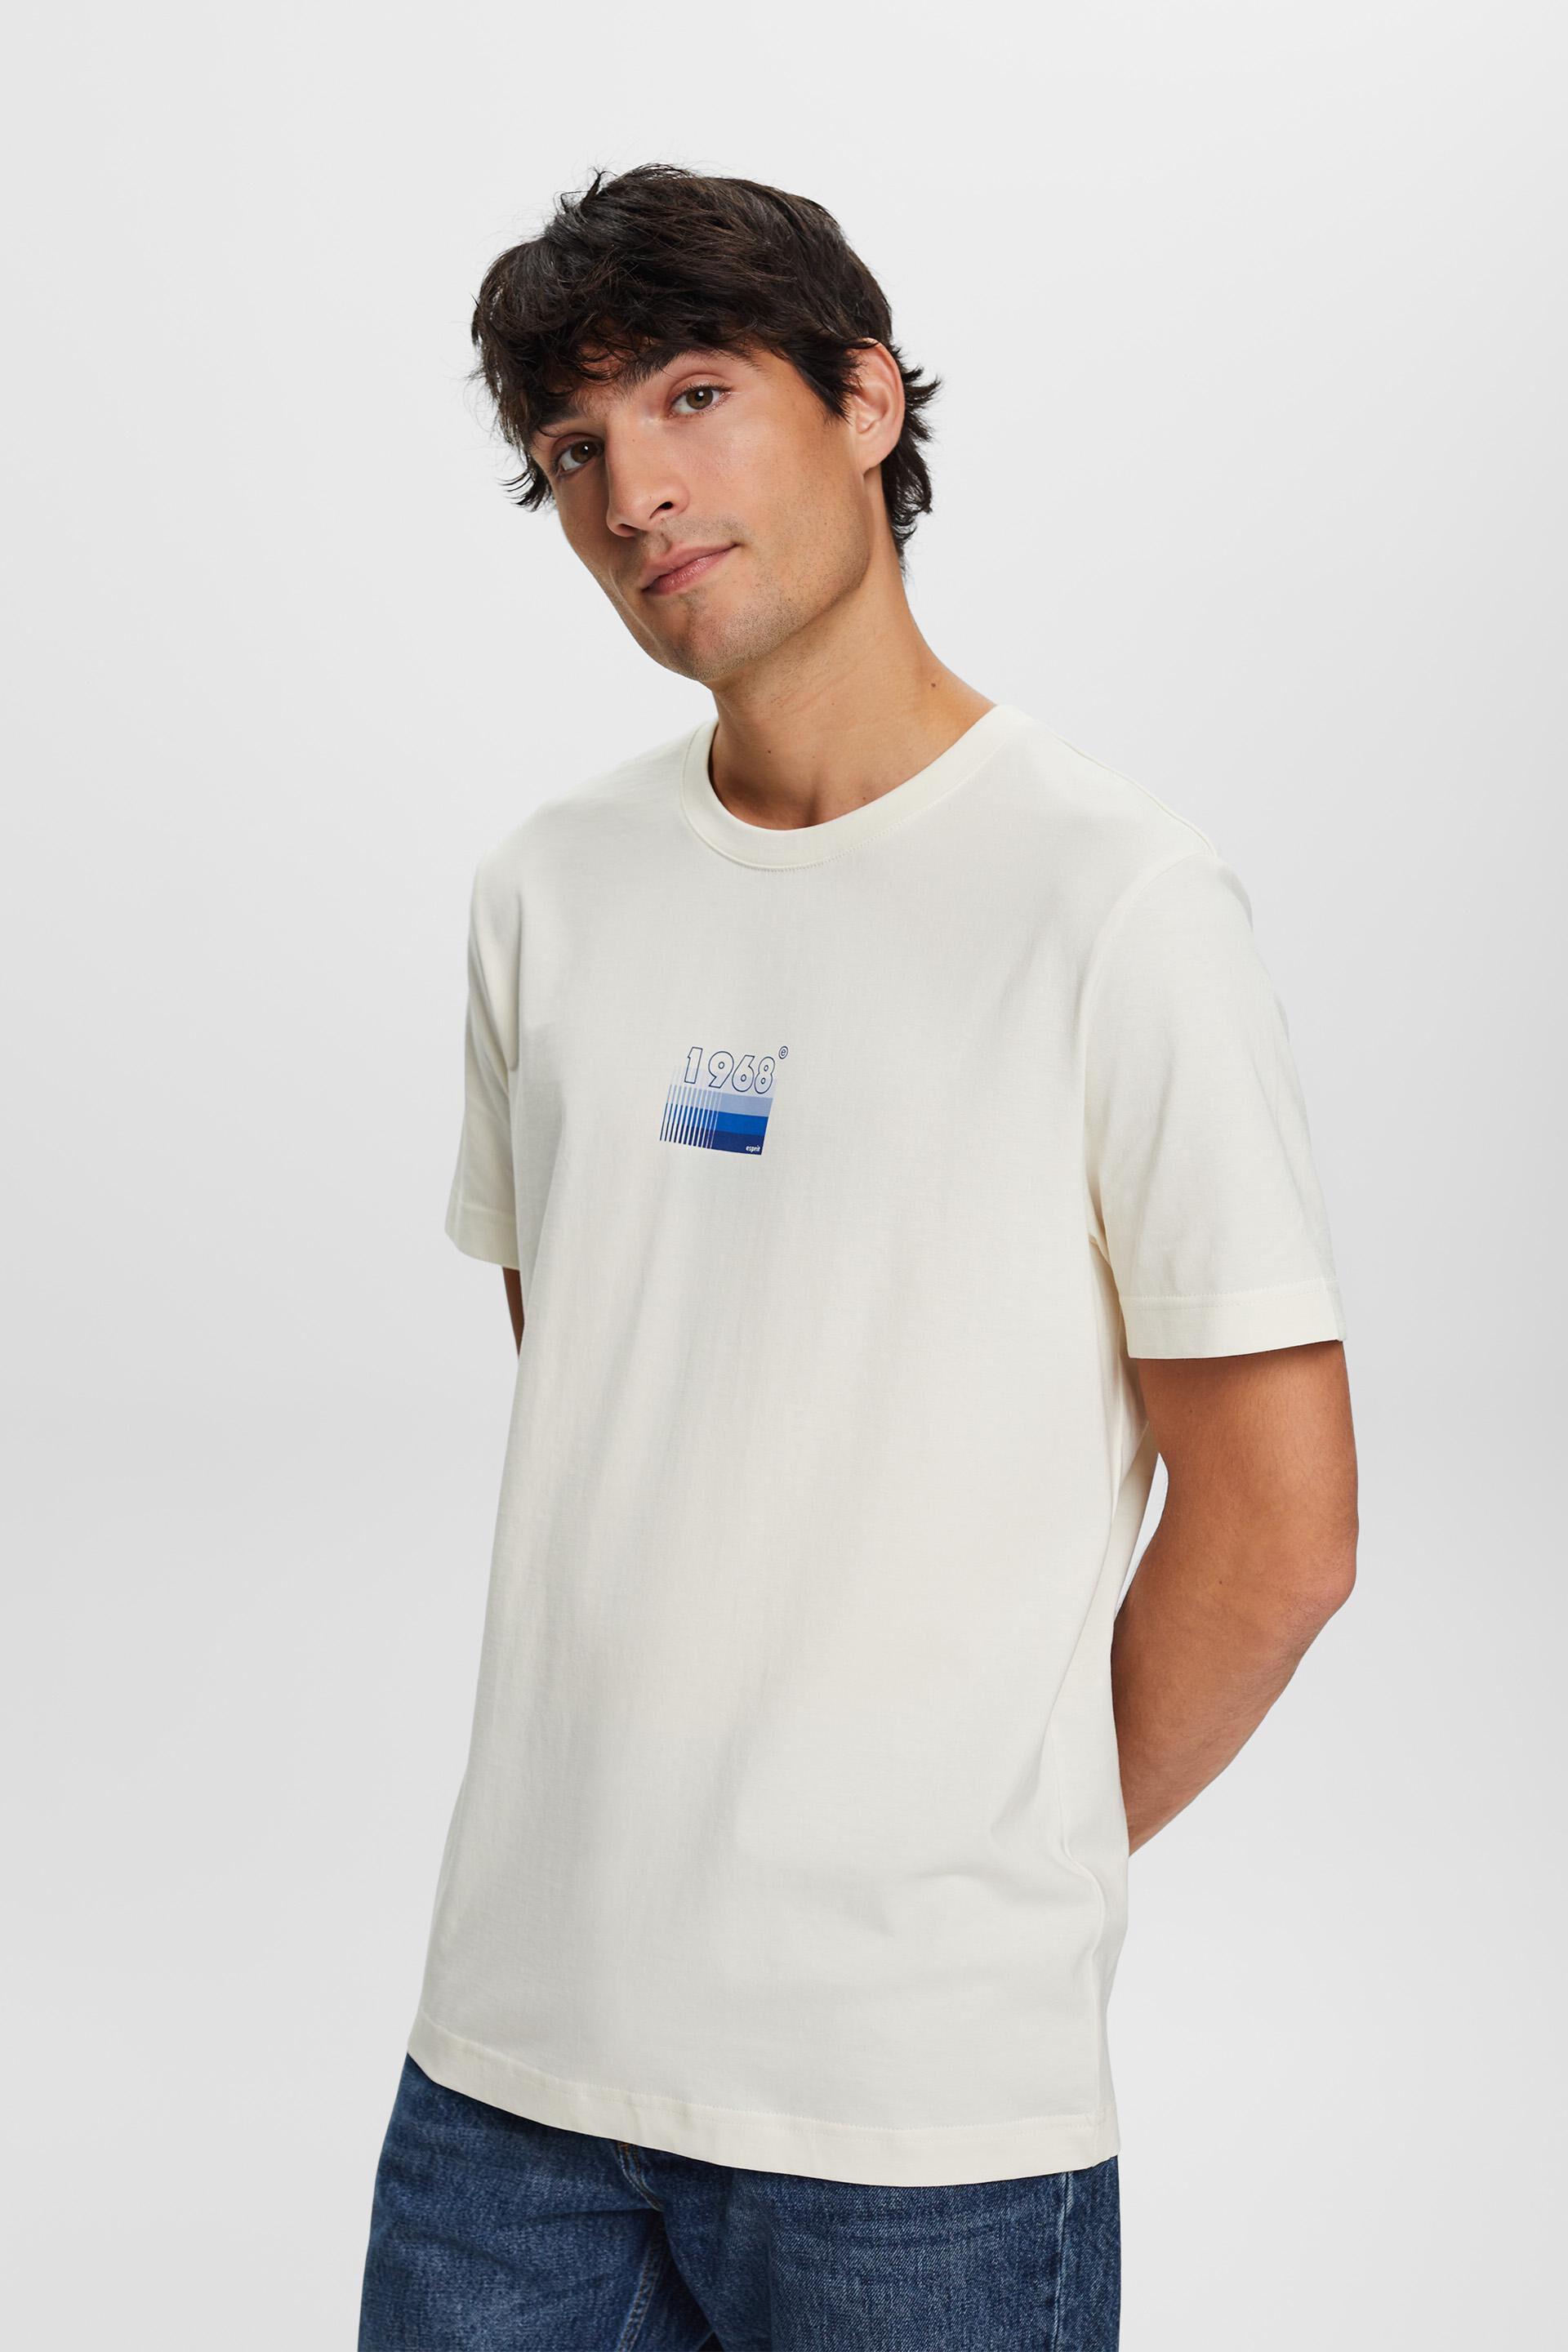 Esprit T-shirt print, Jersey with cotton 100%